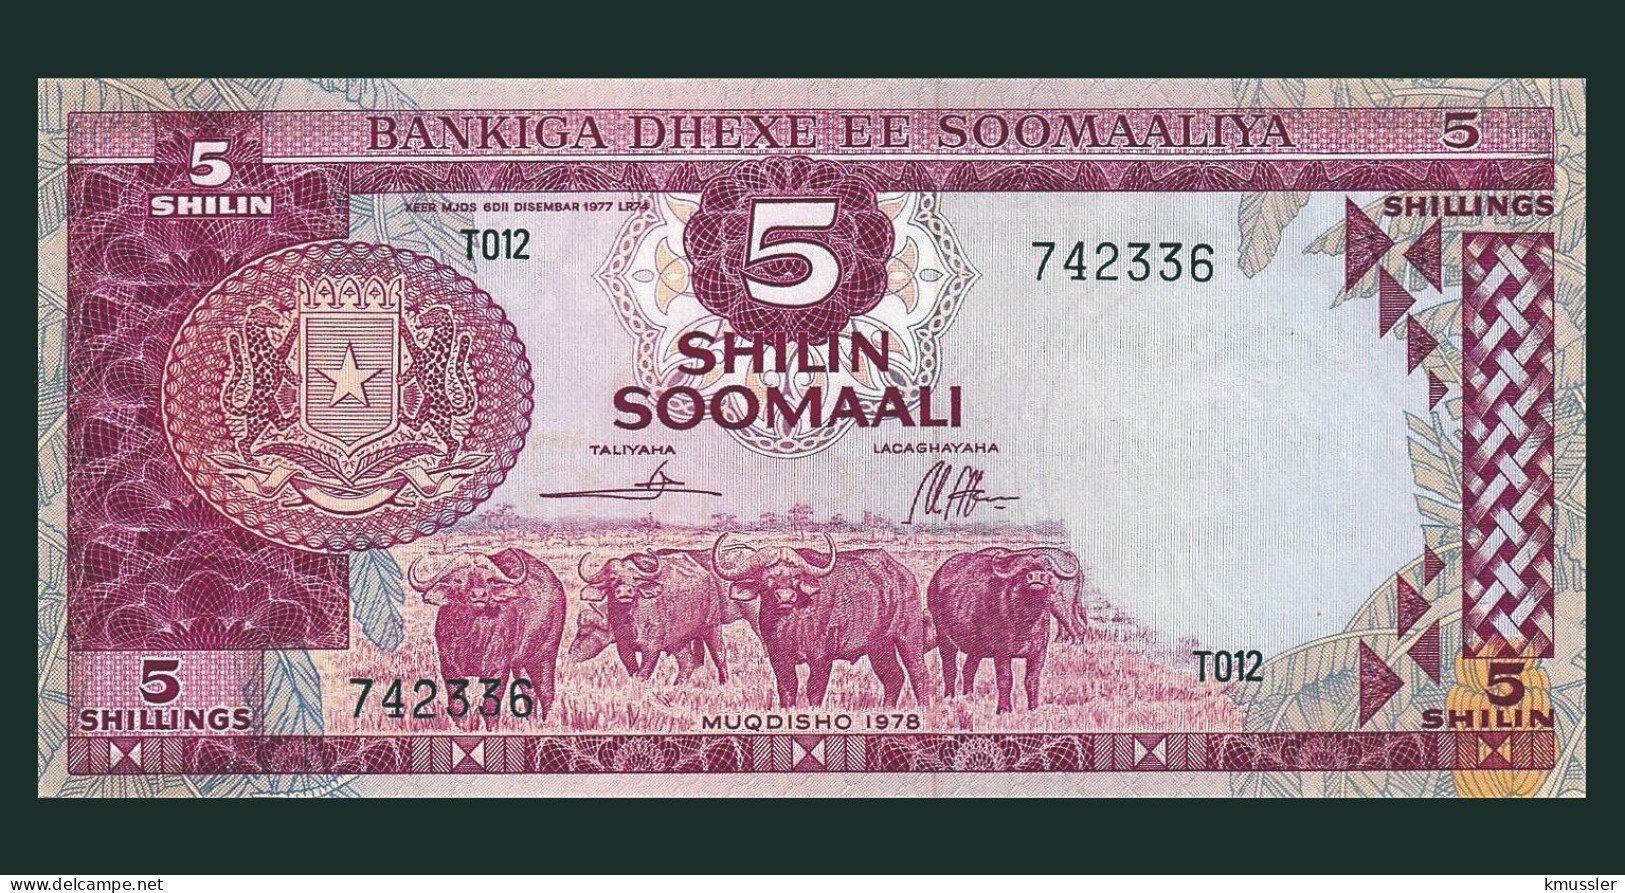 # # # Banknote Aus Somalia 5 Shillings 1978 (P-21) UNC # # # - Somalia